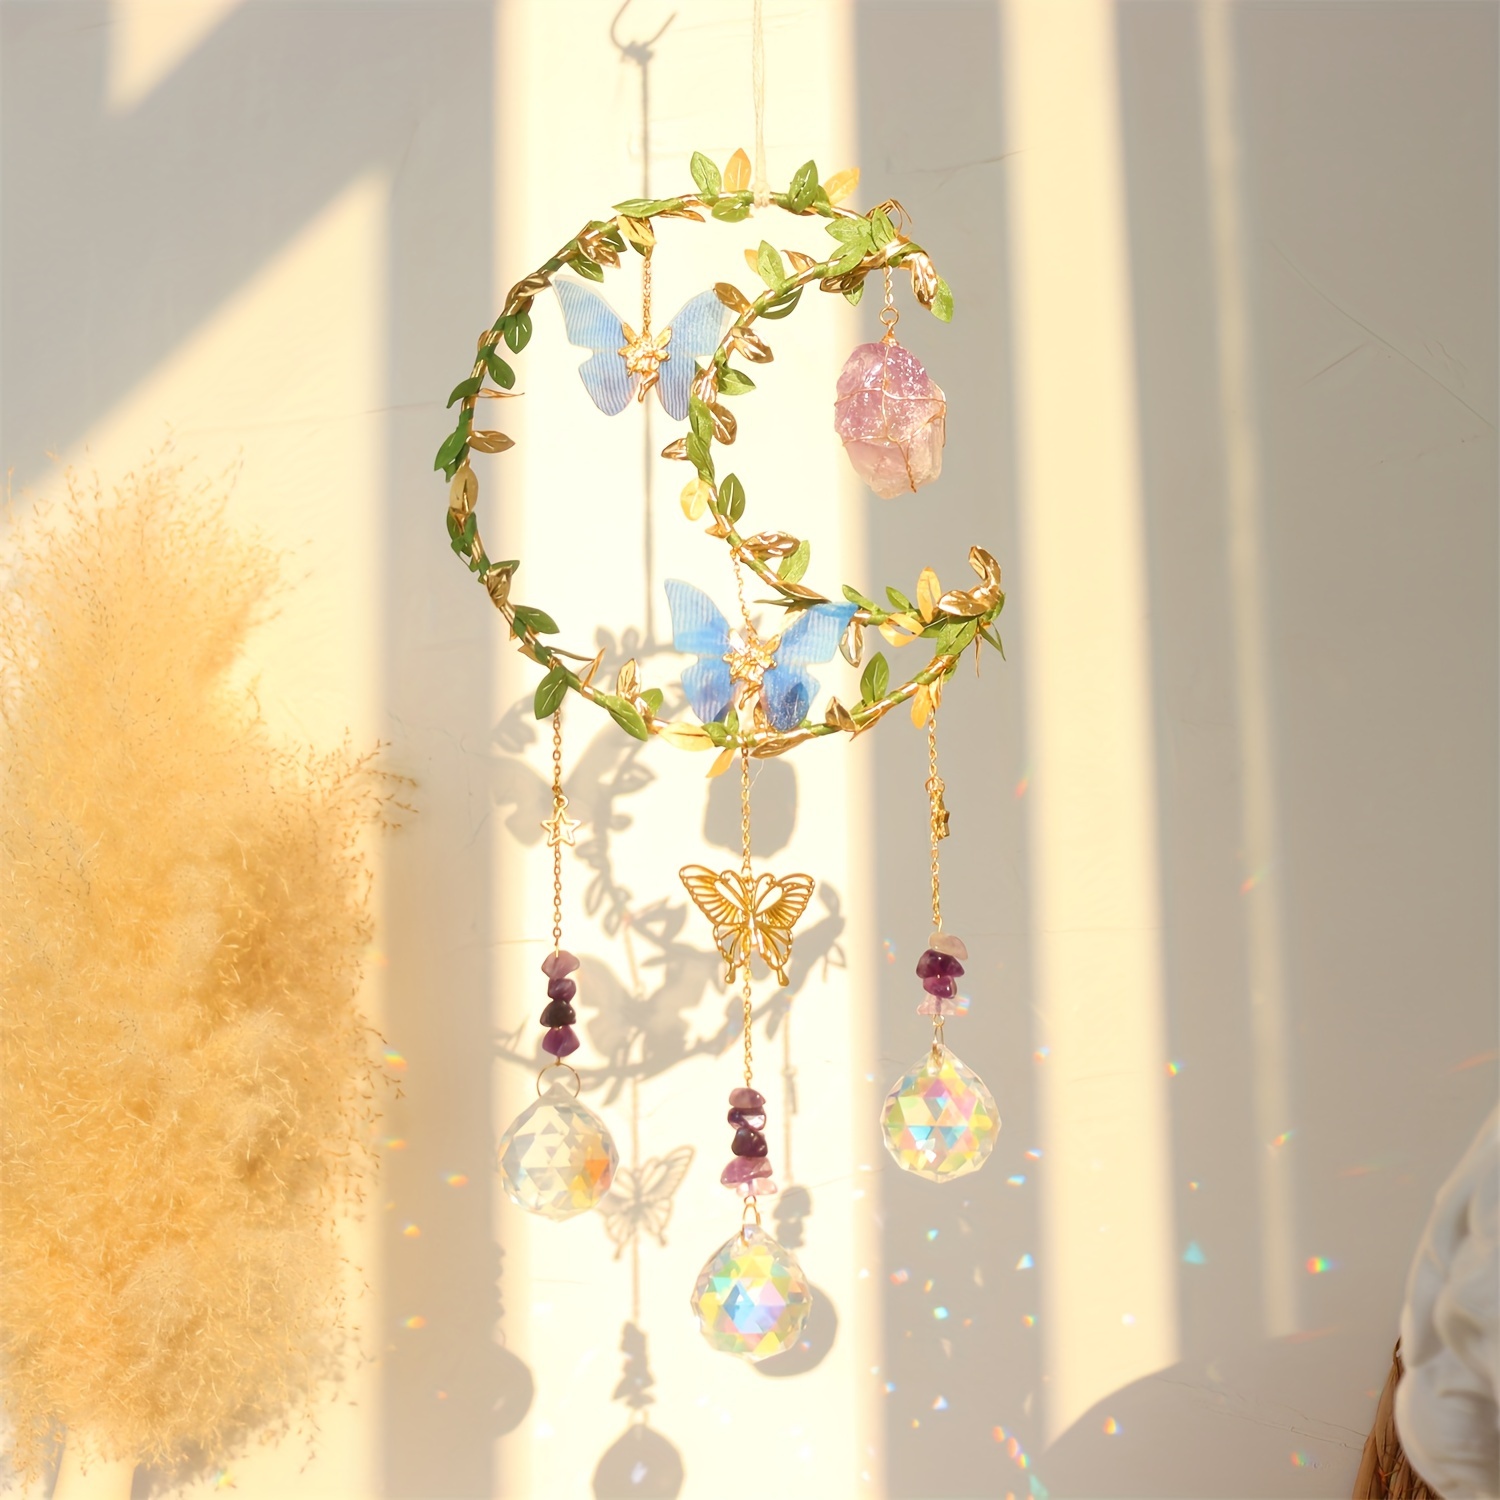  Suncatcher - Amethyst Moon Crystal Sun Catcher Window Hanging,  Good Luck Charms Gifts for Women Chrismas Thanksgiving Birthday Crystal :  Patio, Lawn & Garden